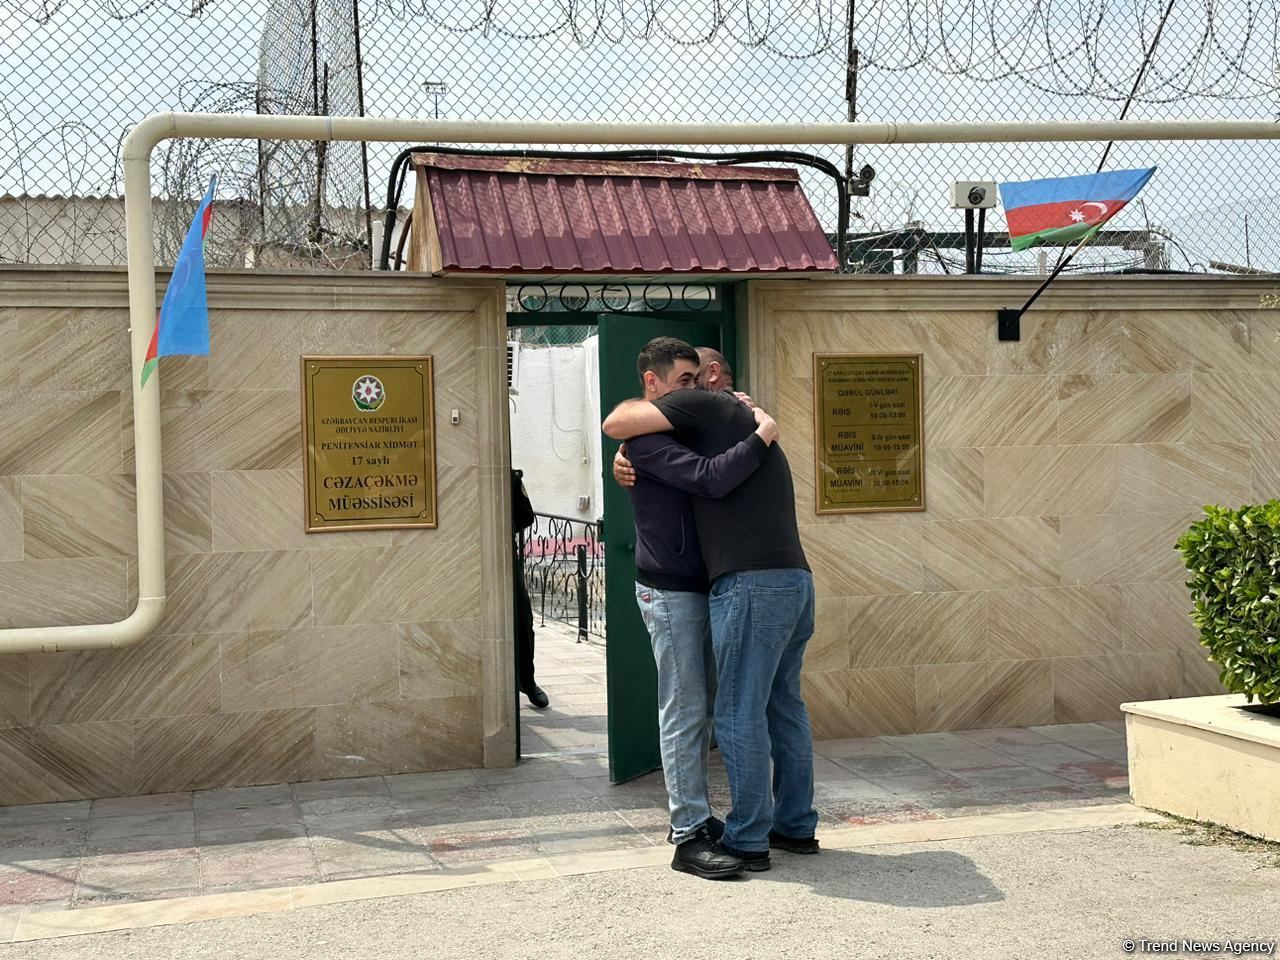 Execution of pardon order kicks off in penitentiary institution No. 17 in Azerbaijan (PHOTO)